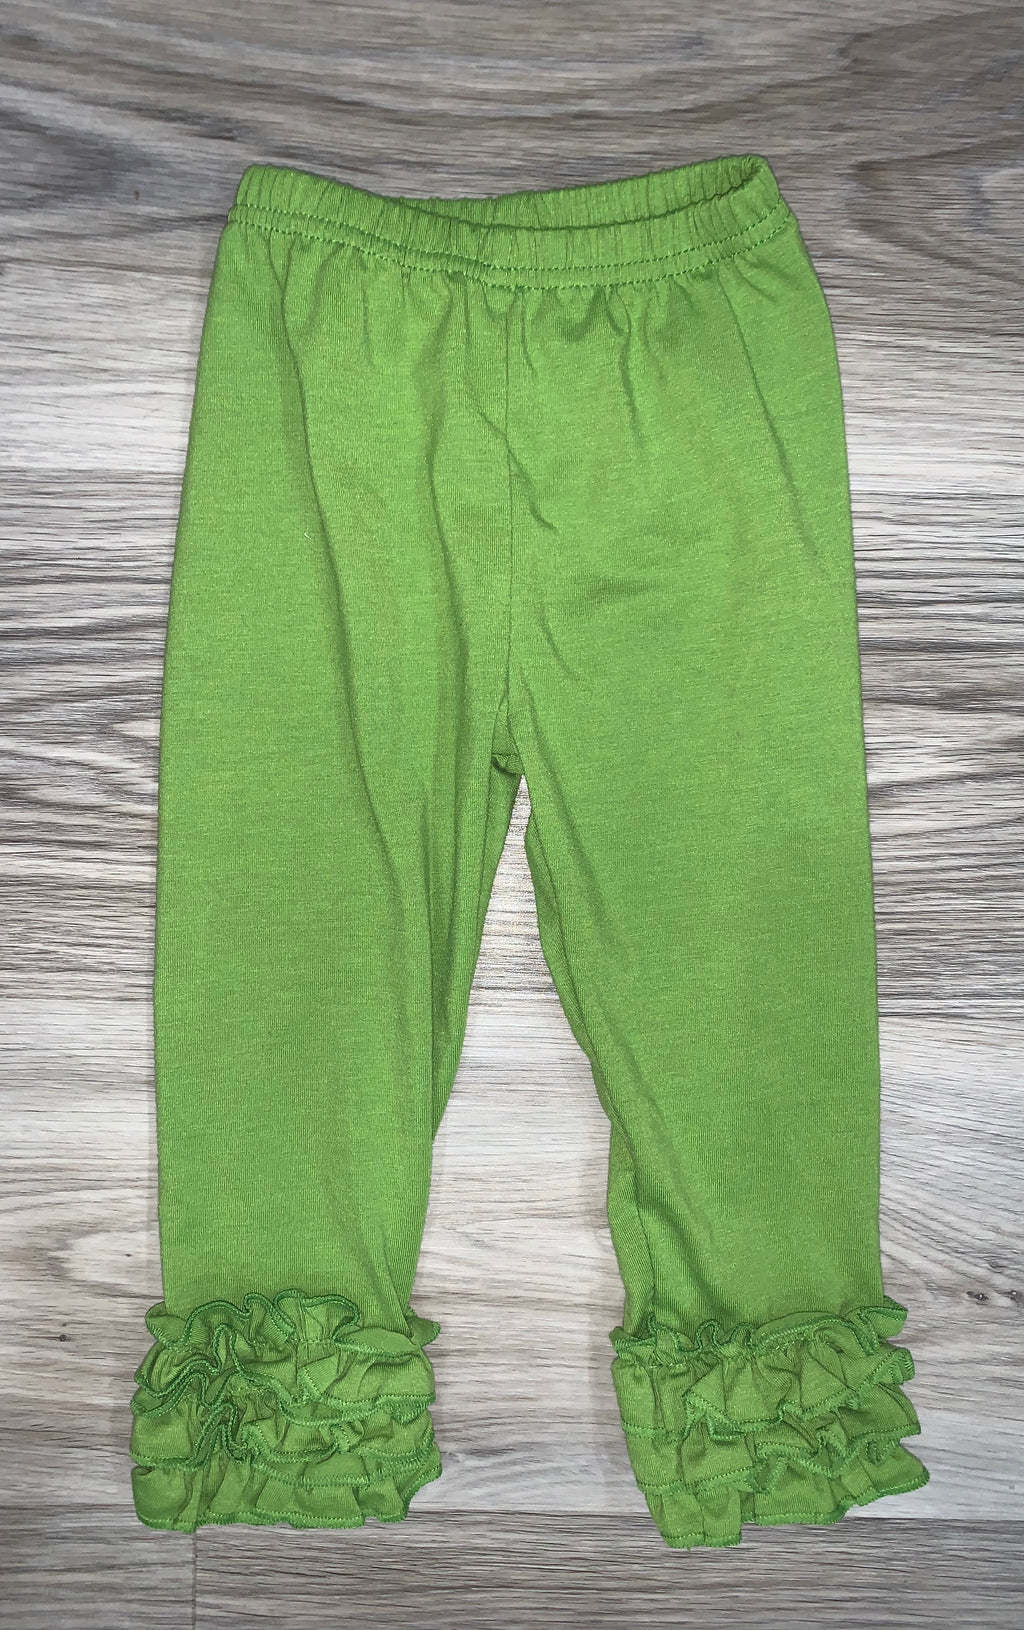 Icing Pants (Green)